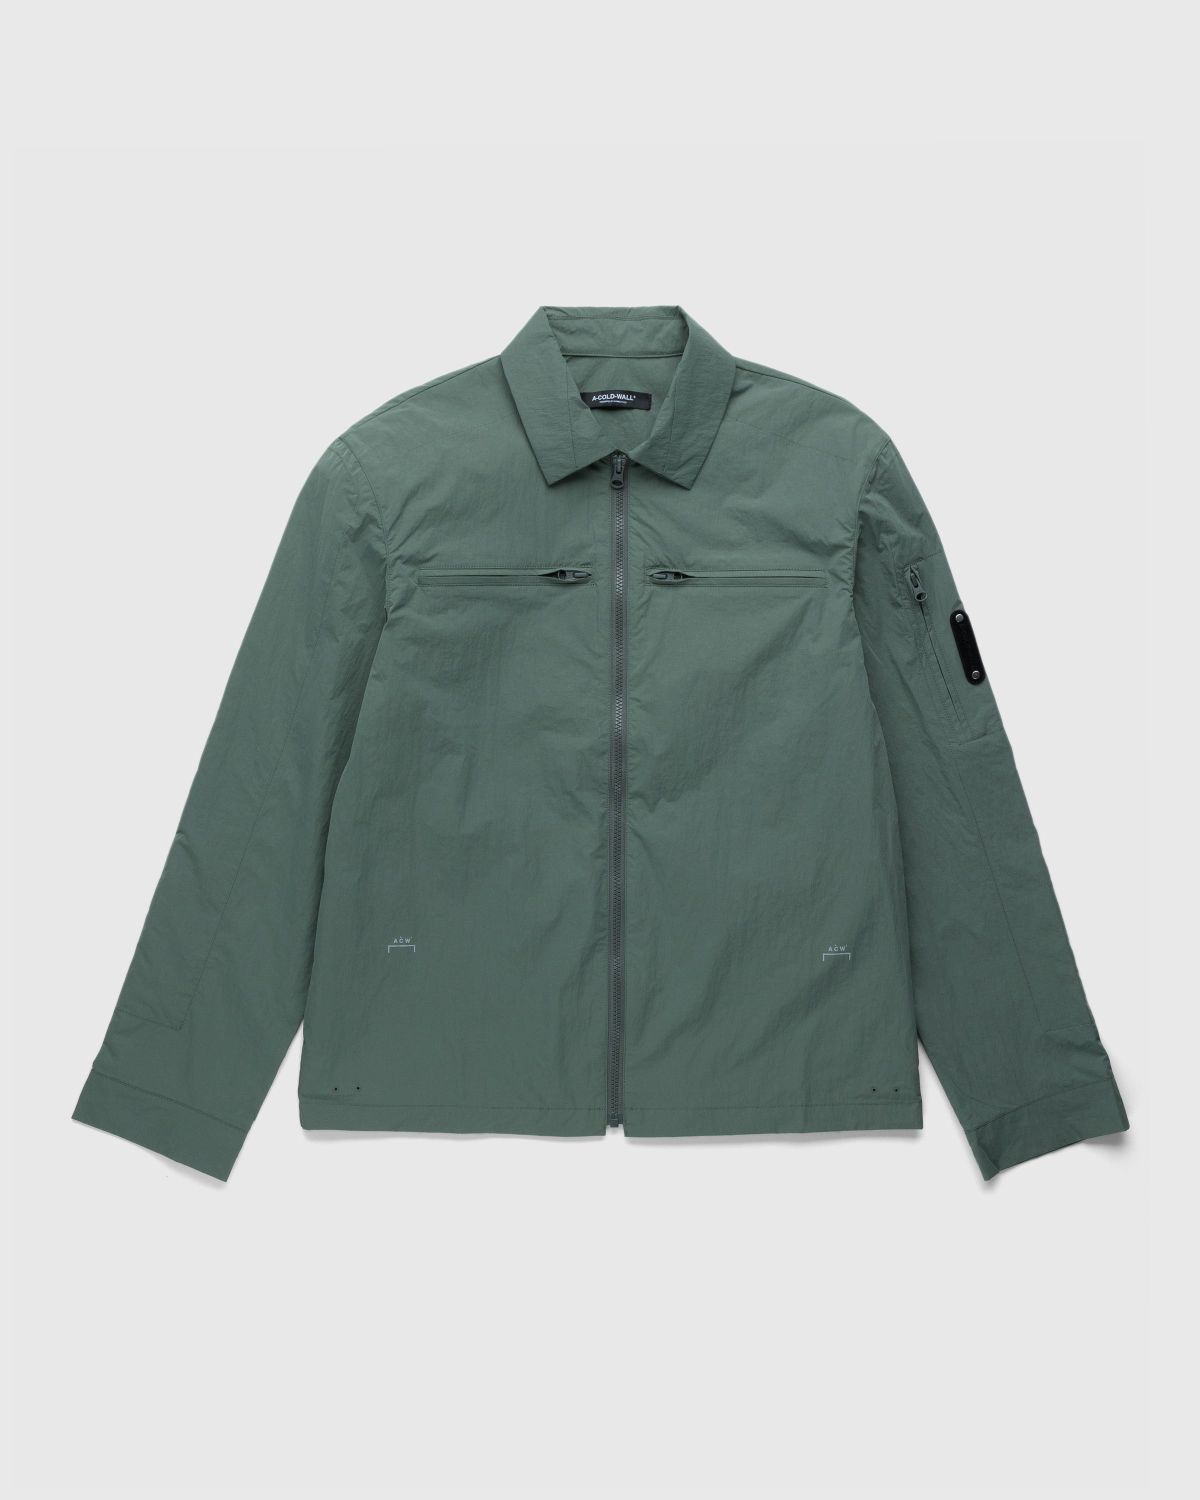 A-Cold-Wall* – Gaussian Overshirt Military Green - Overshirt - Green - Image 1